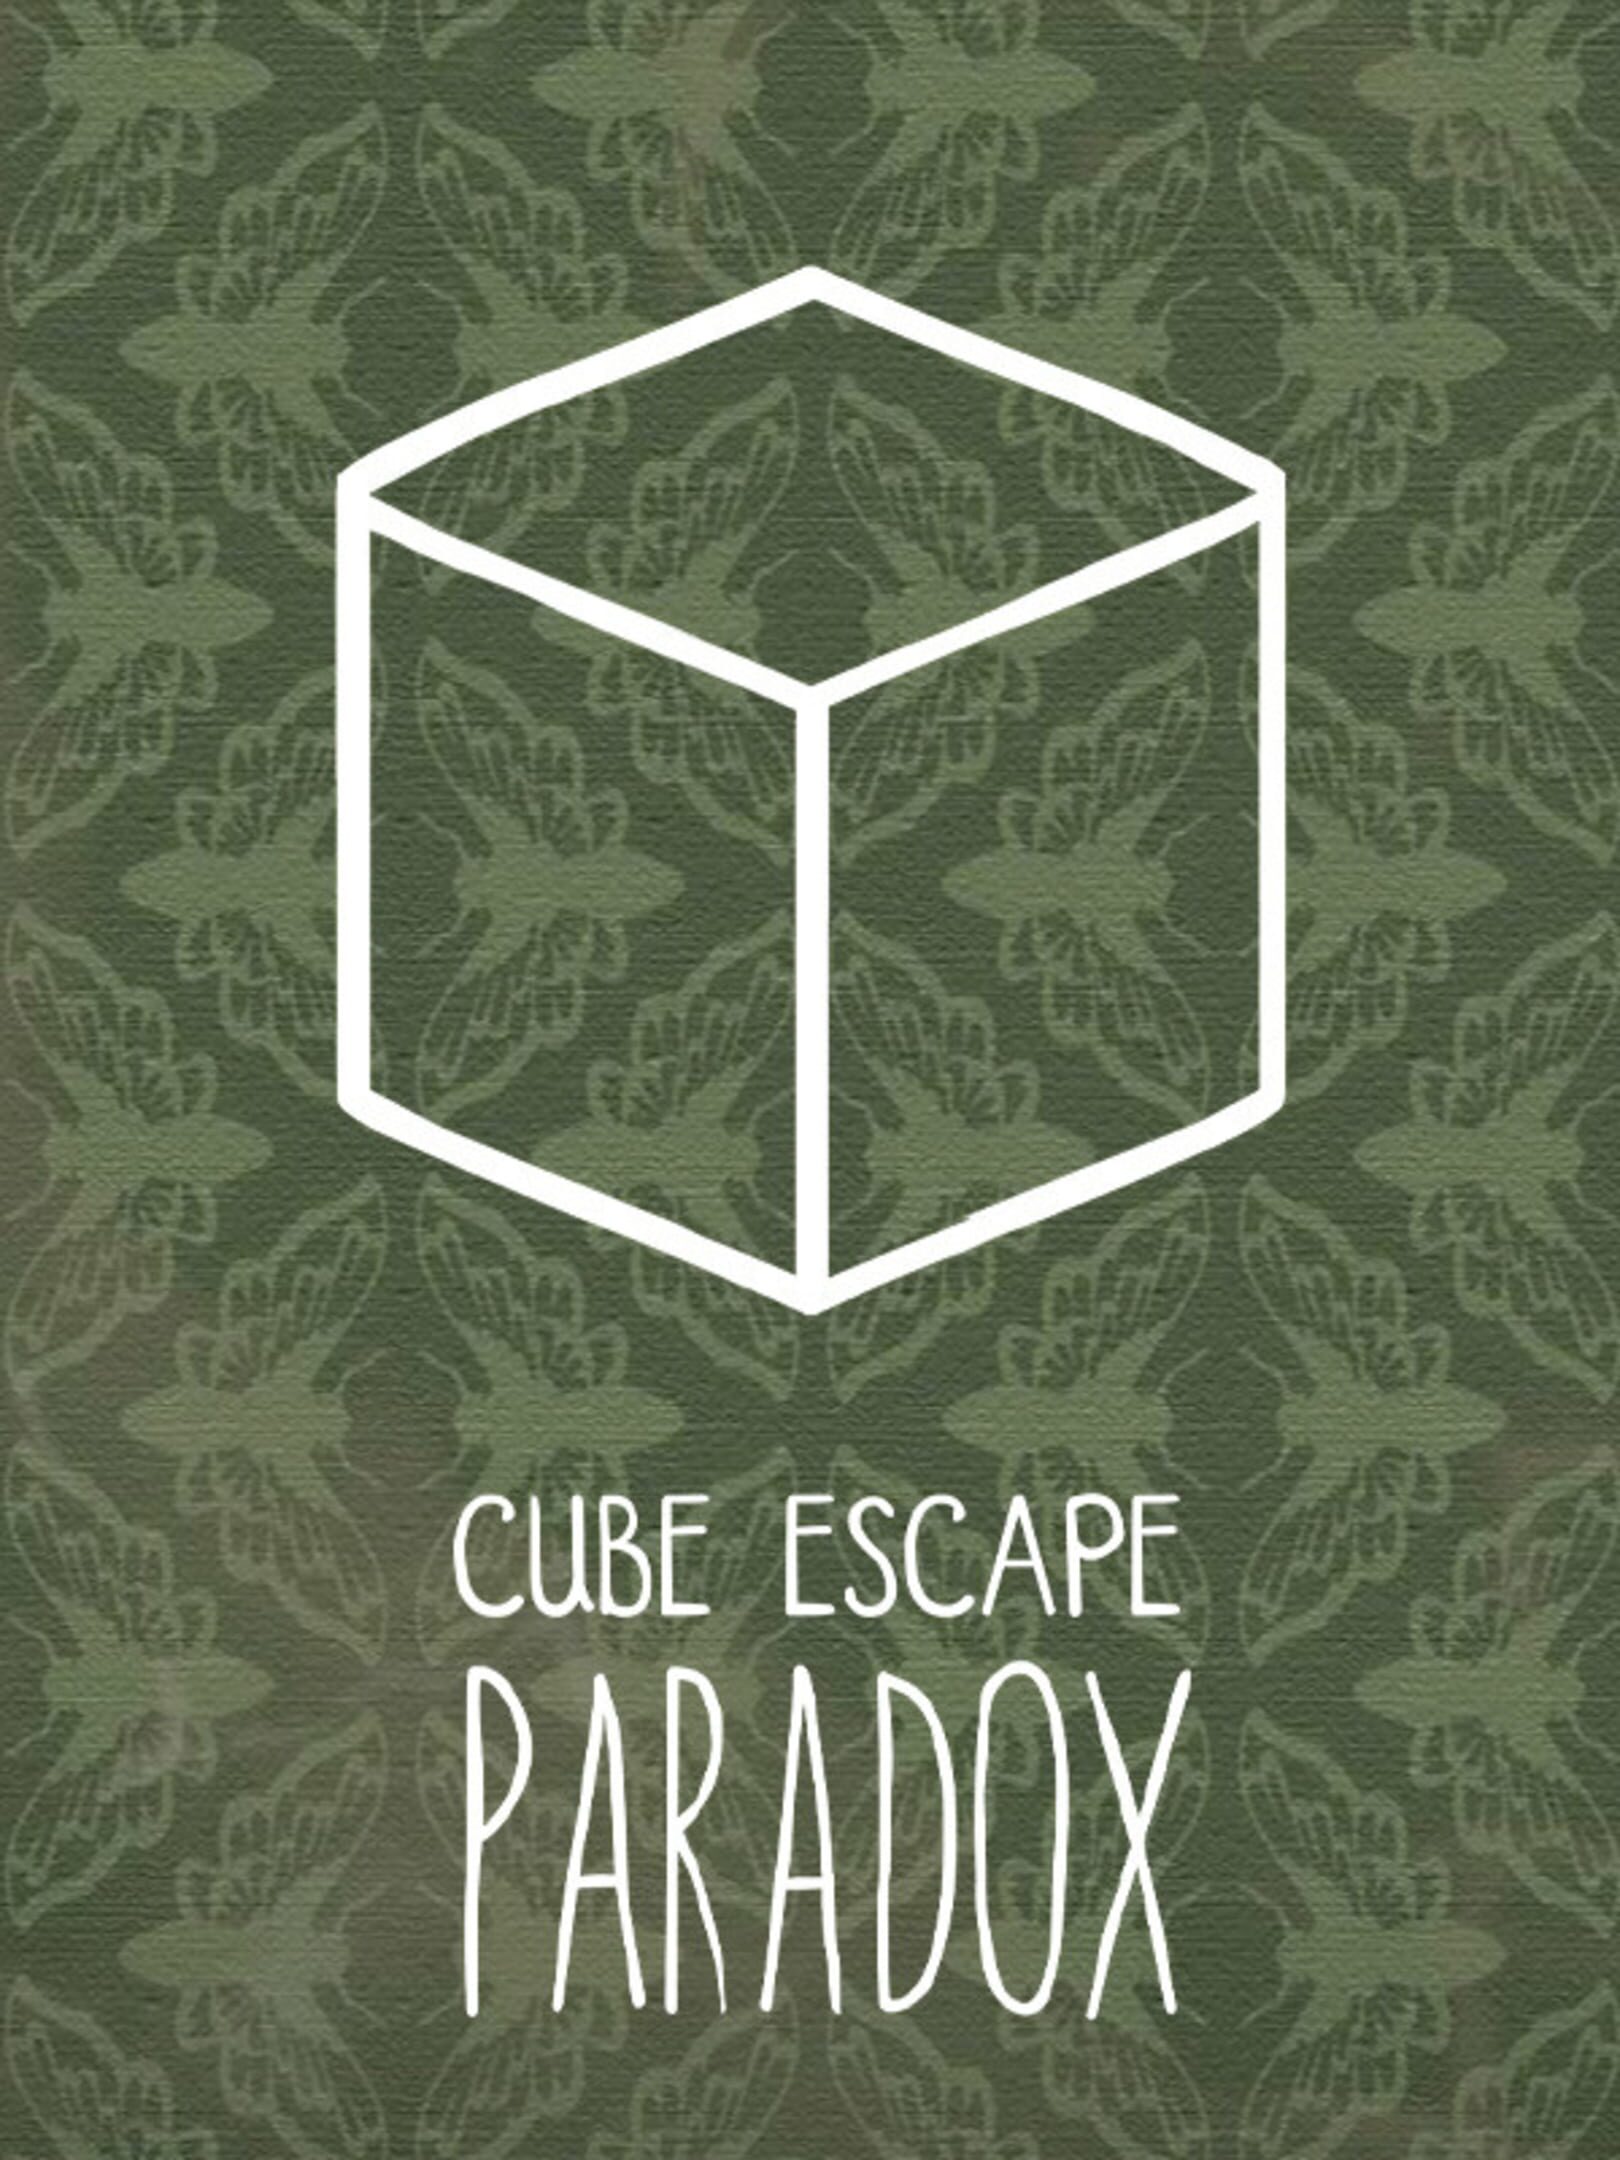 Cube paradox 2. Игра Cube Escape Paradox. Кьюб Эскейп парадокс. Расти Лейк куб Эскейп. Paradox обложка.